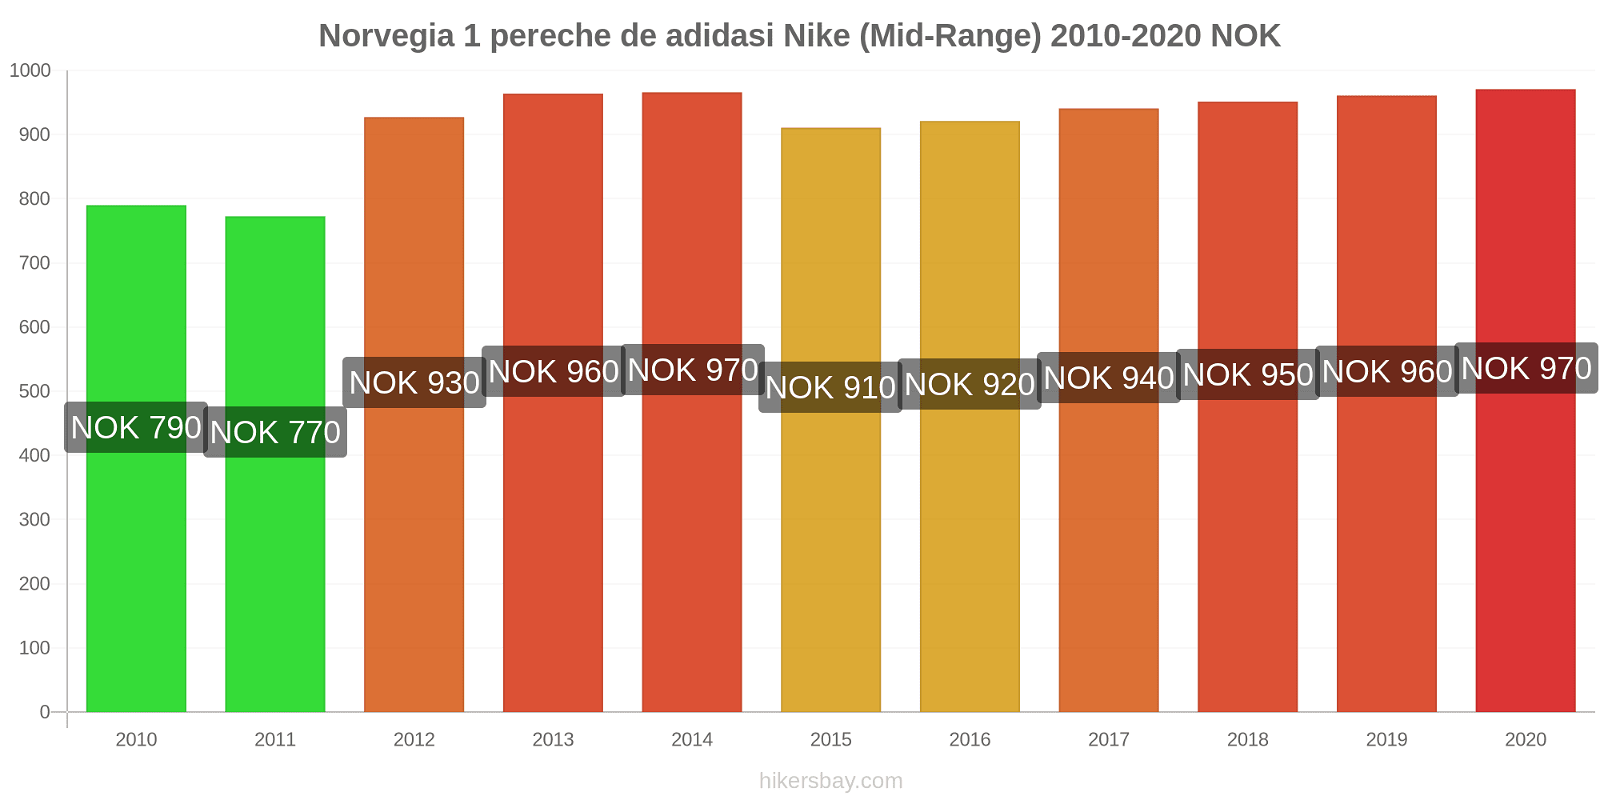 Norvegia modificări de preț 1 pereche de adidasi Nike (Mid-Range) hikersbay.com